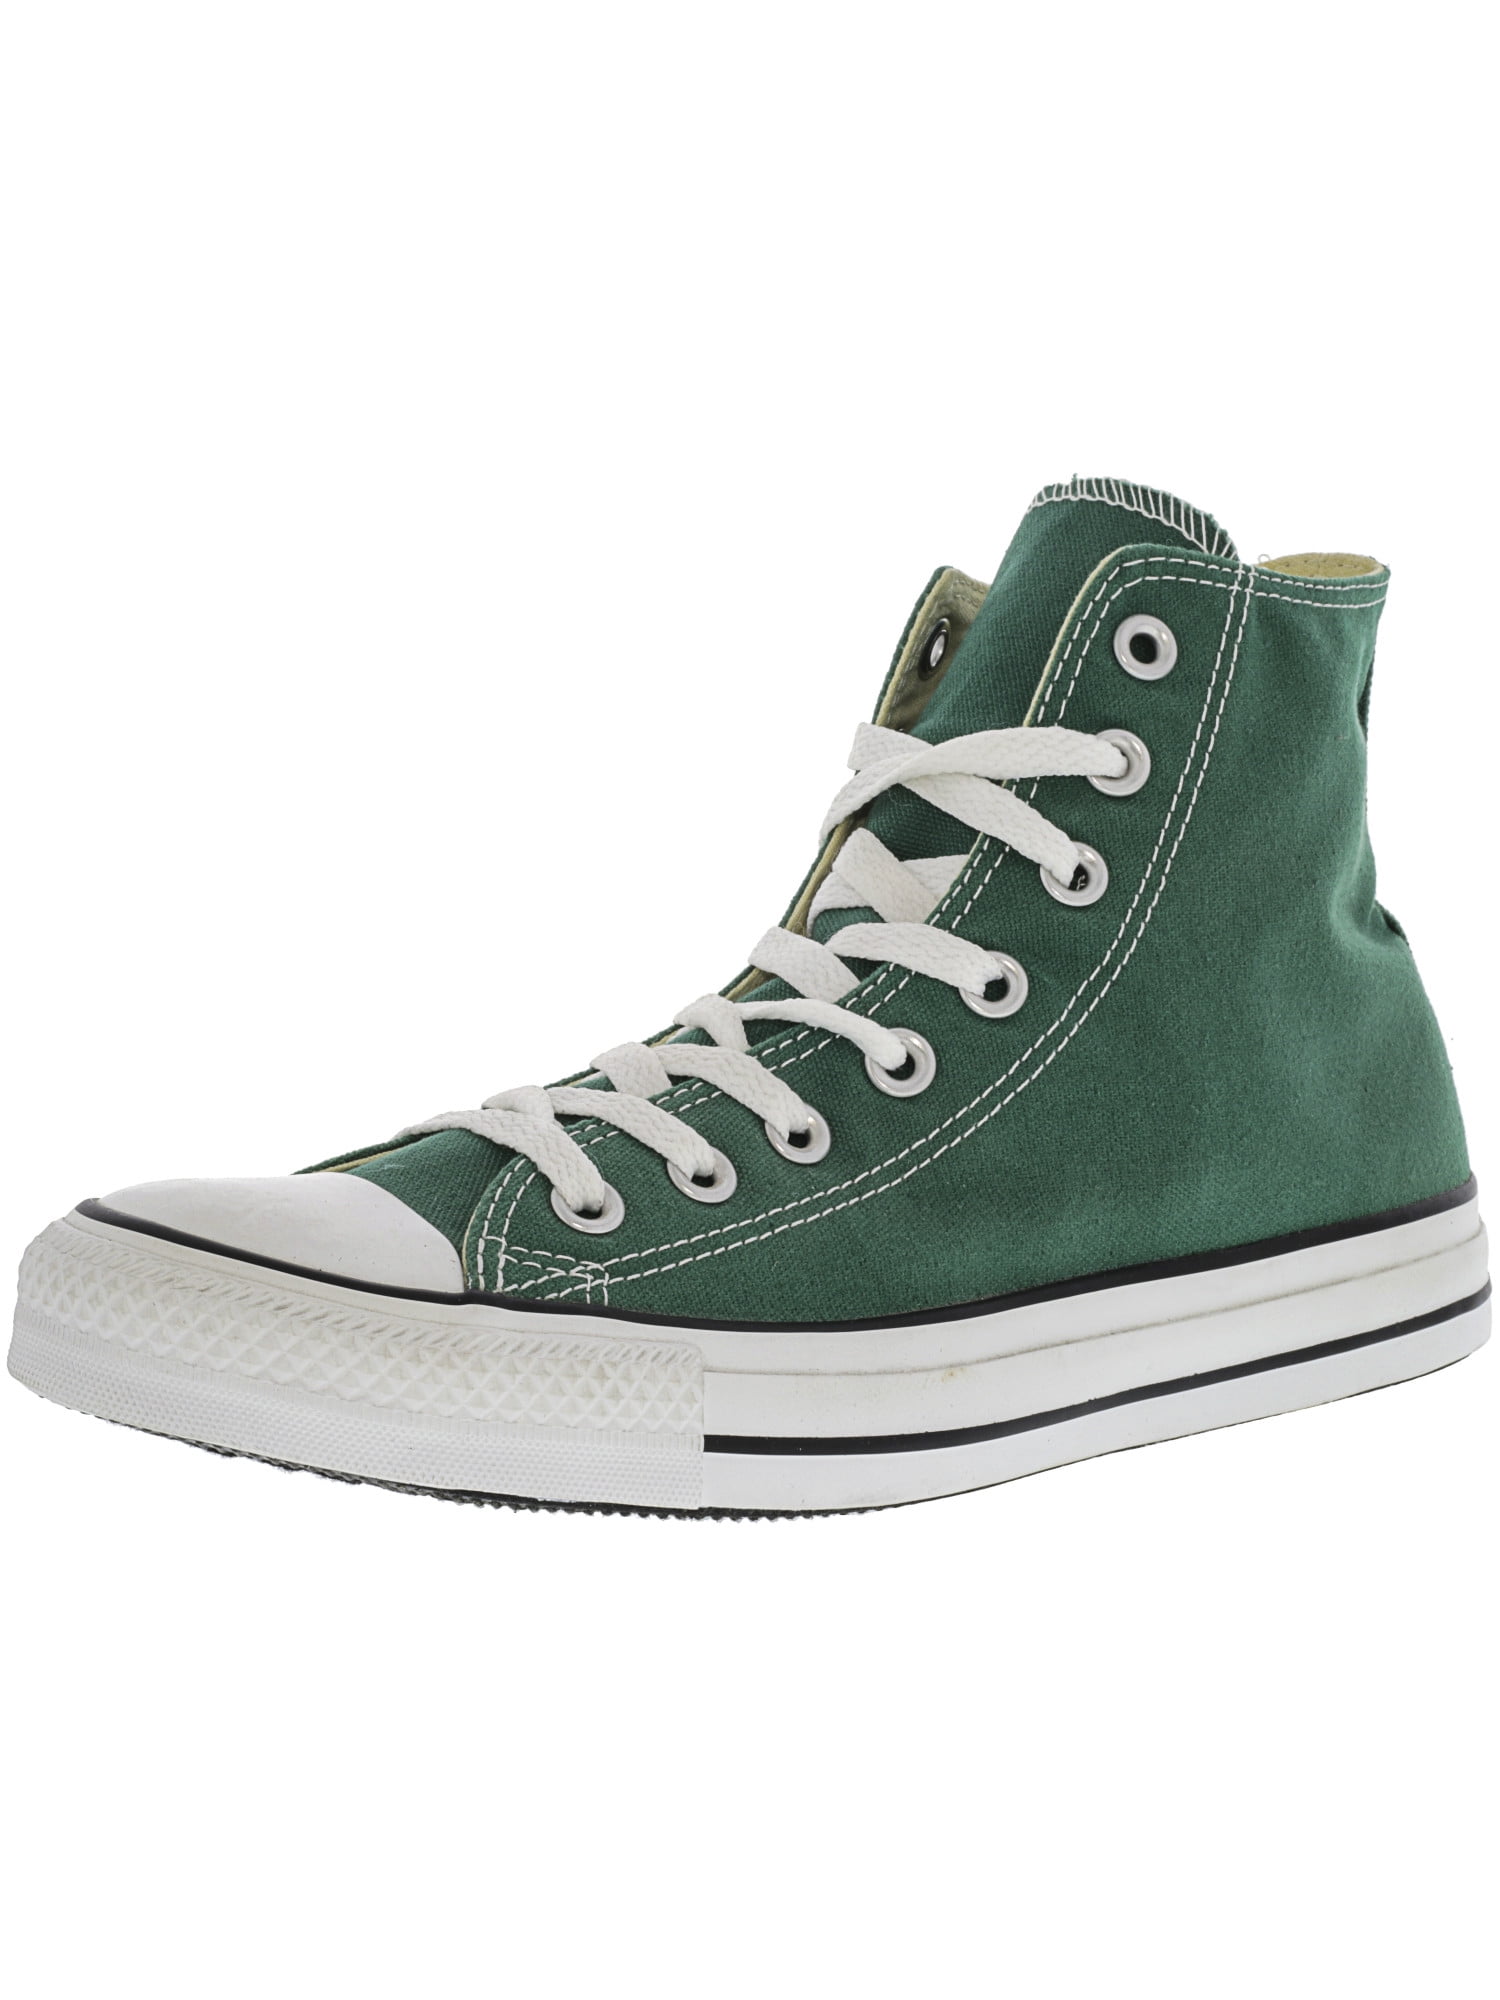 Converse Chuck Taylor All Star Hi Forest Green High-Top Fashion Sneaker -  10M / 8M 